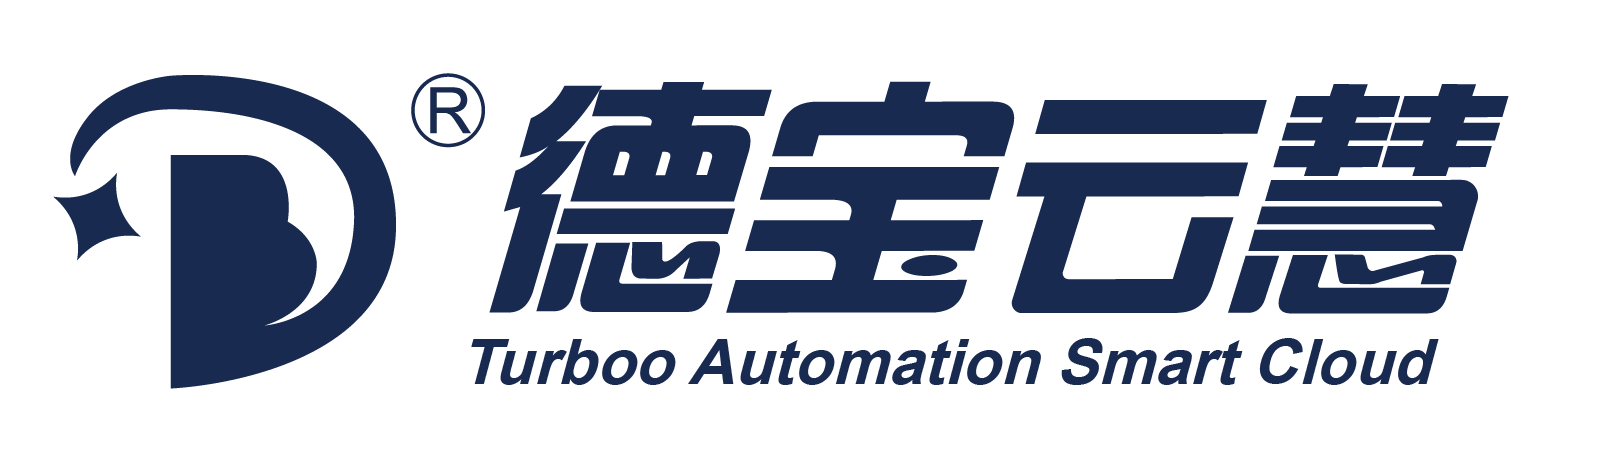 Turboo Automation Smart Cloud